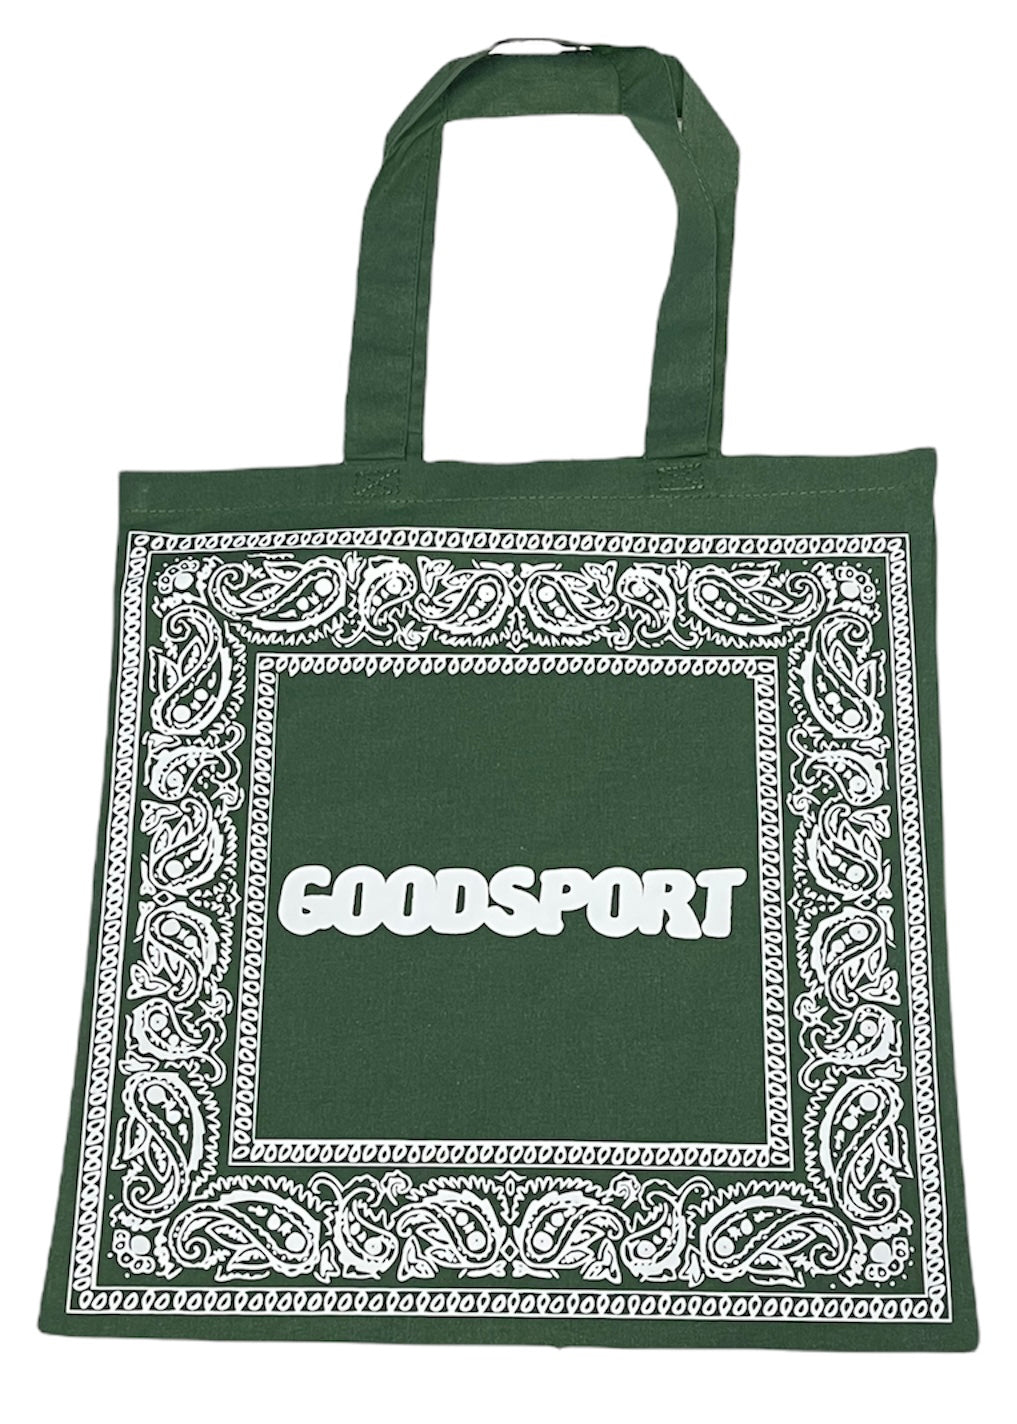 Goodsport Forest Green Bandana Tote Bag